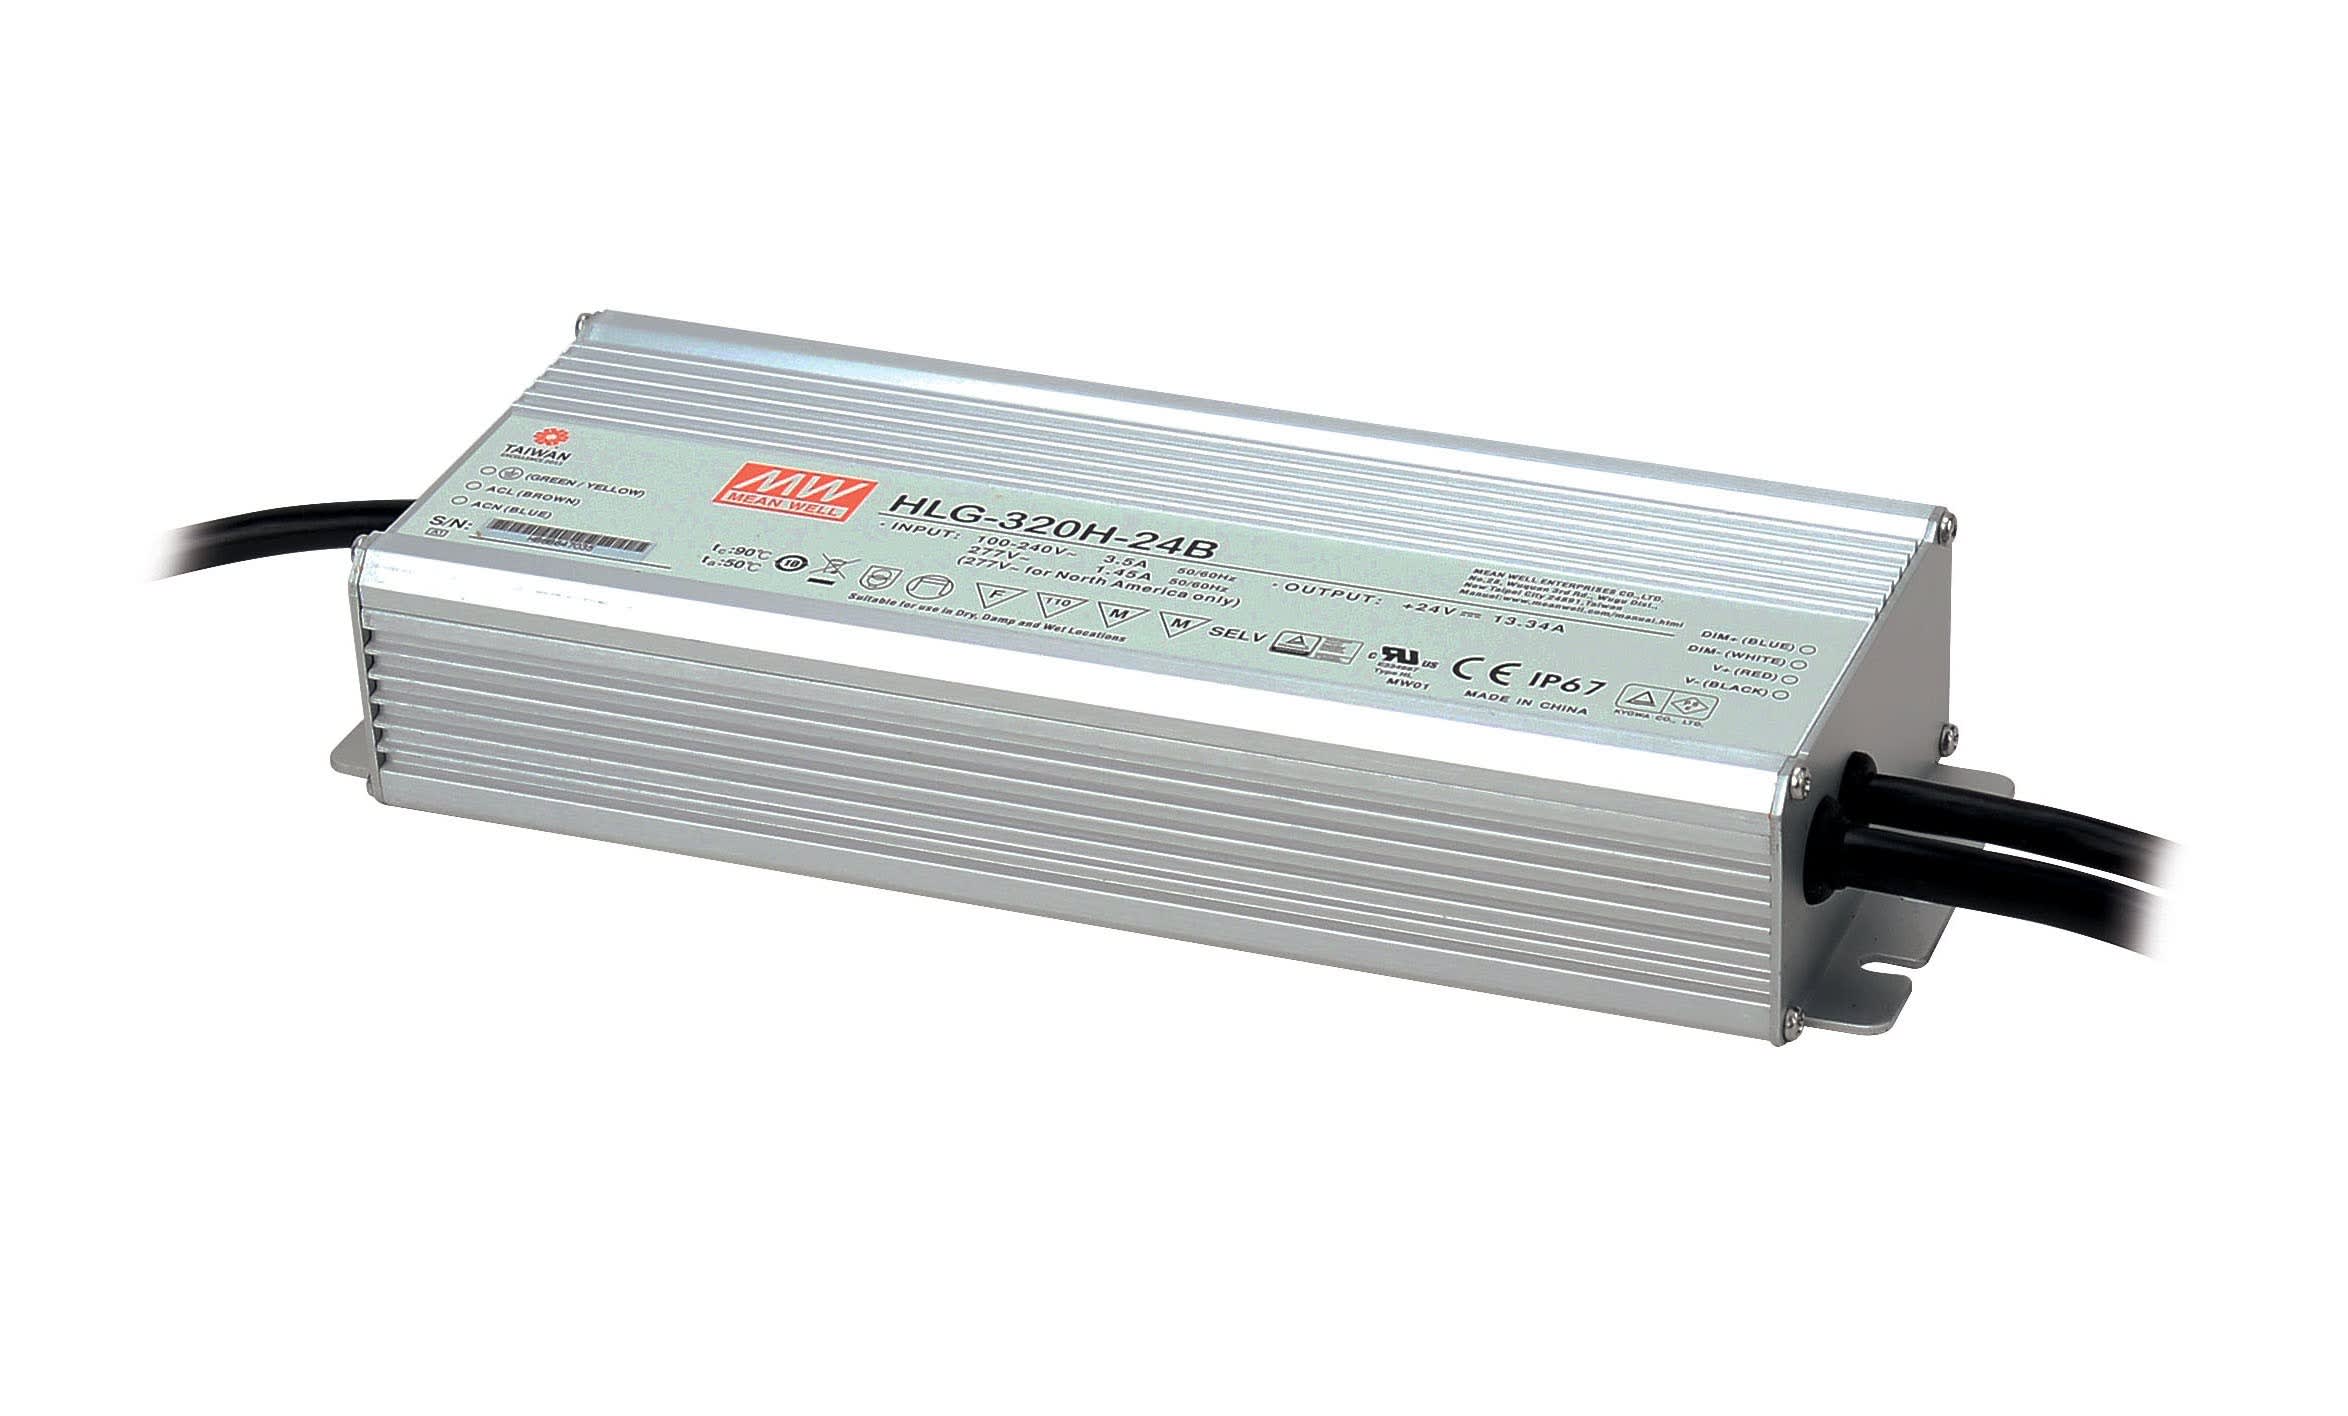 Aric - Alimentation LED 320W 24V DC - IP67